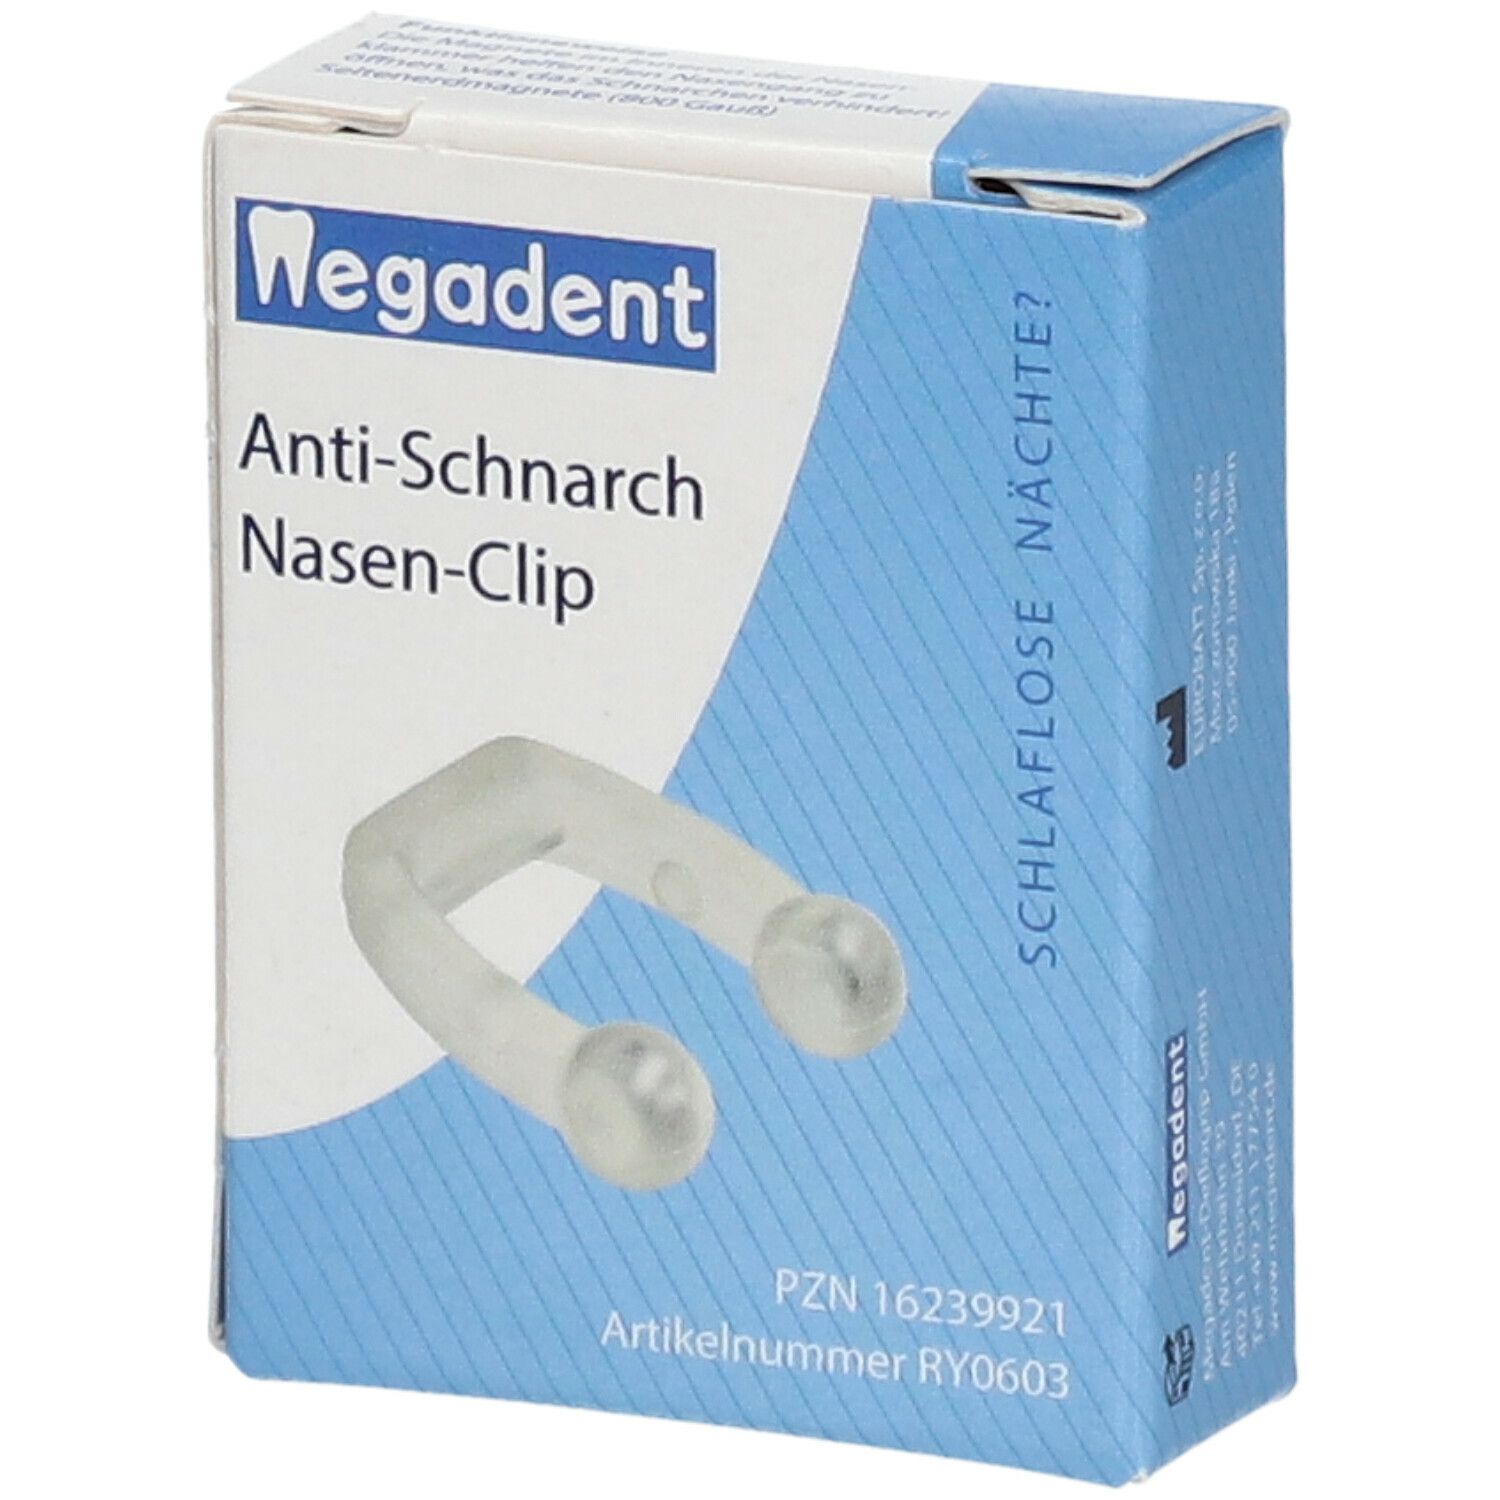 Rysons Anti-Schnarch nasal clip